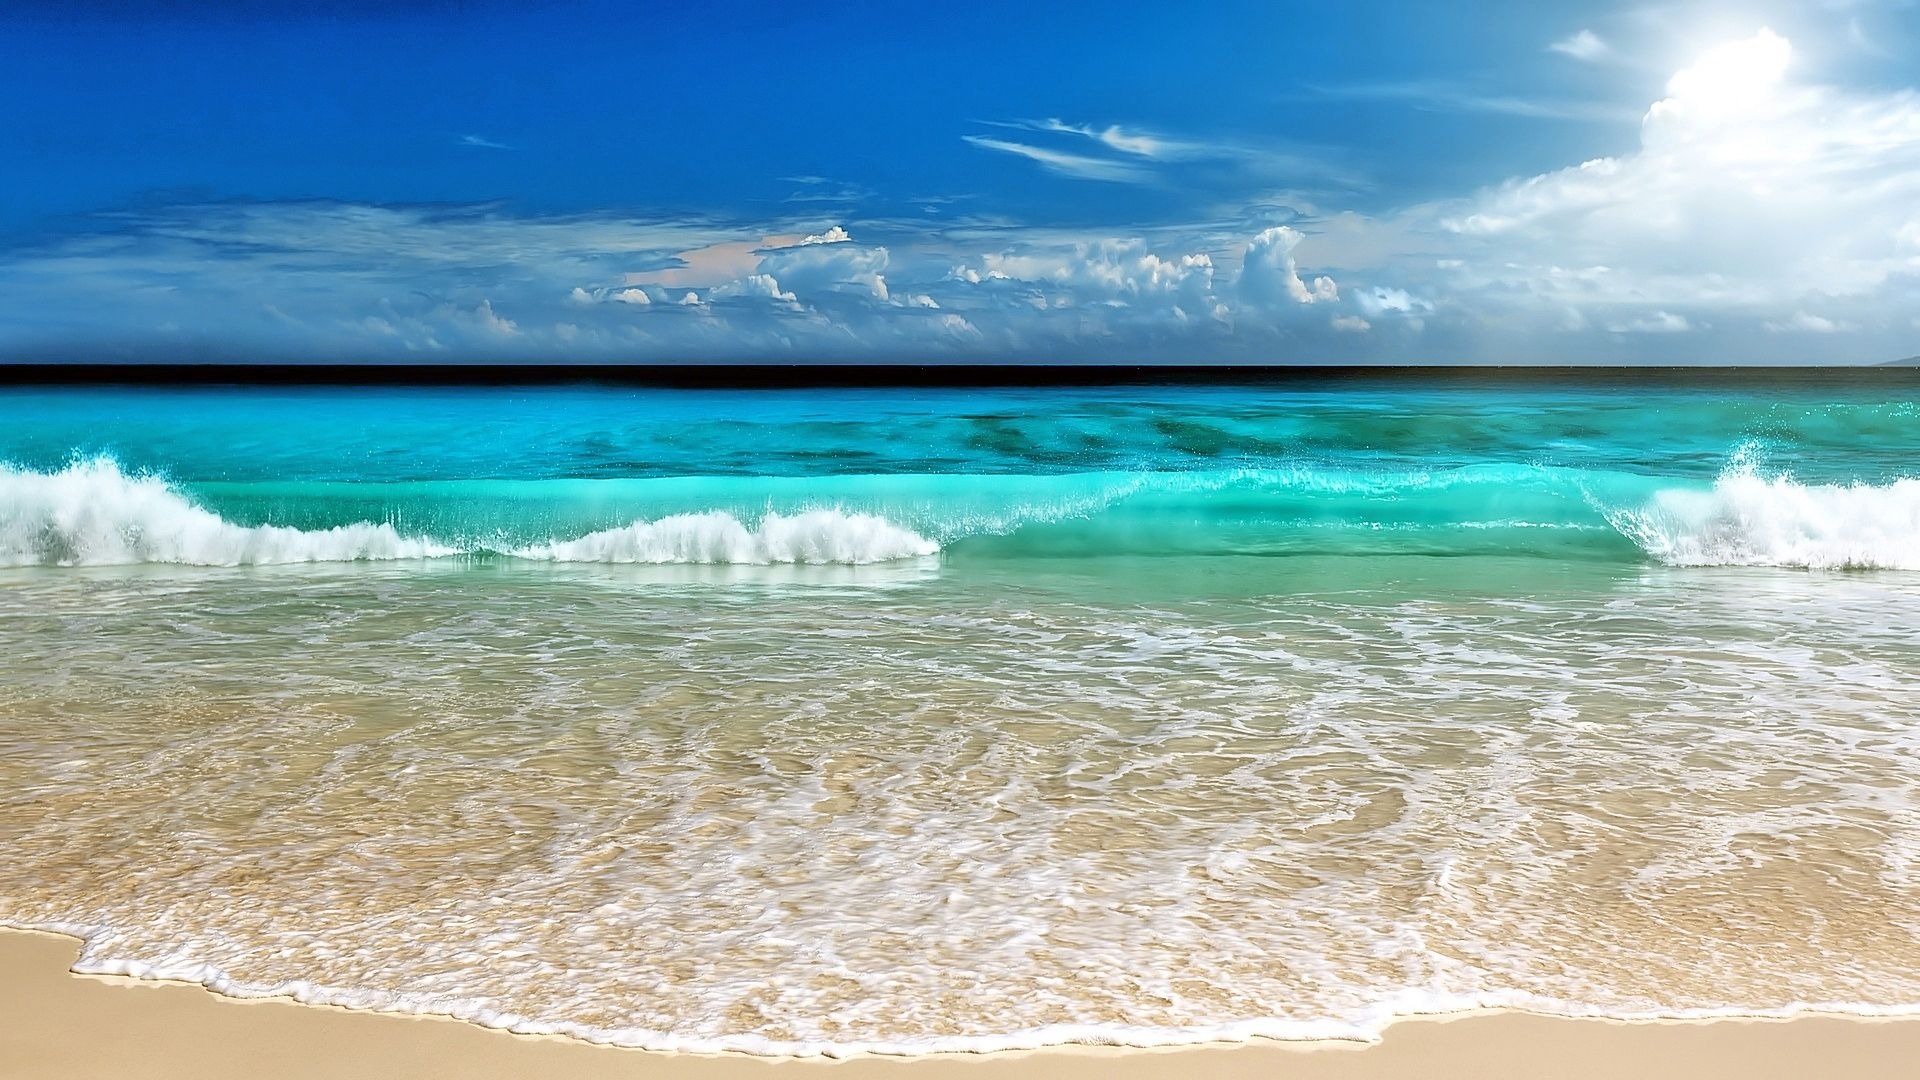 Photo Of Ocean And Beach